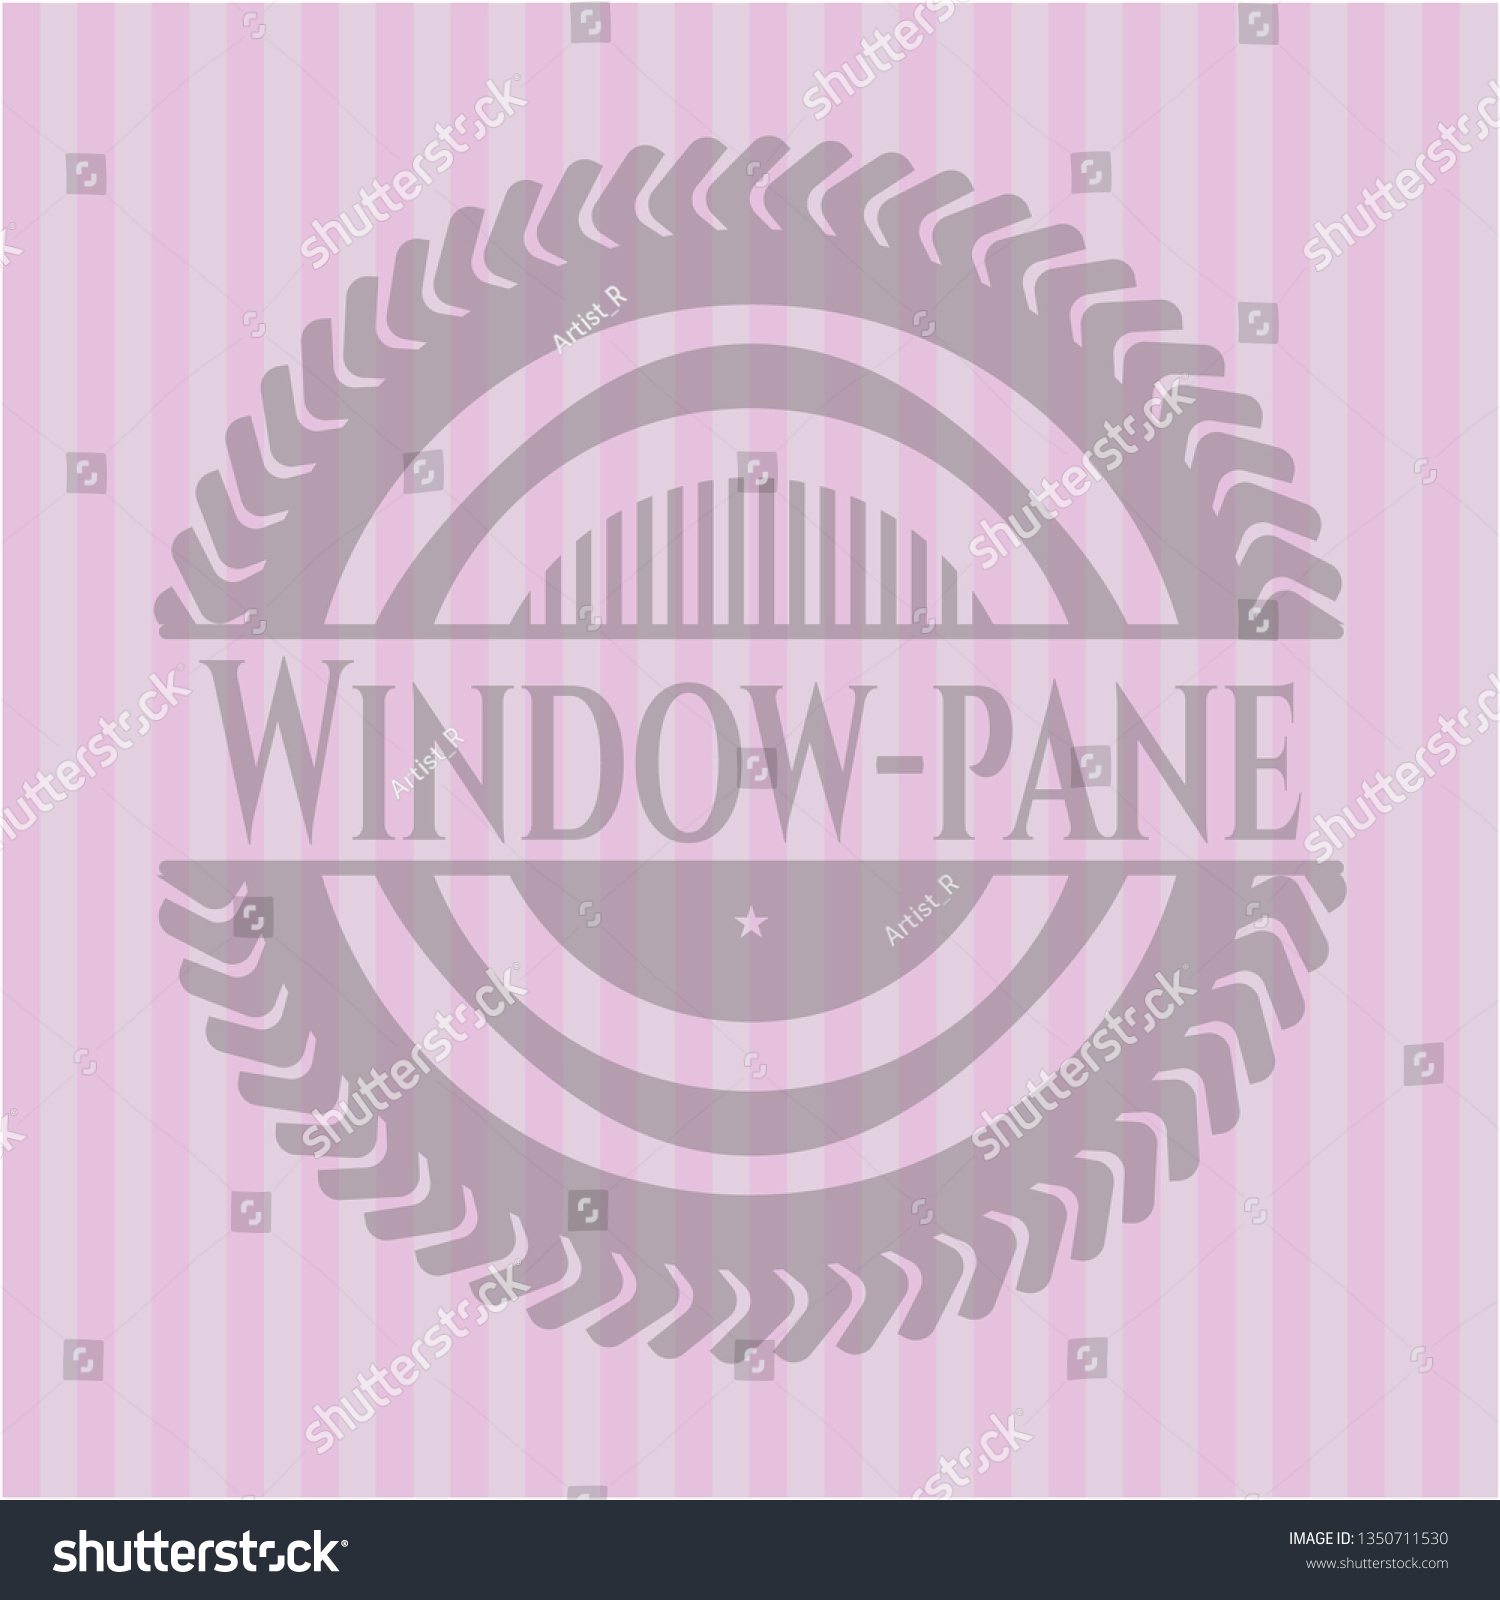 Window-pane realistic pink emblem #1350711530